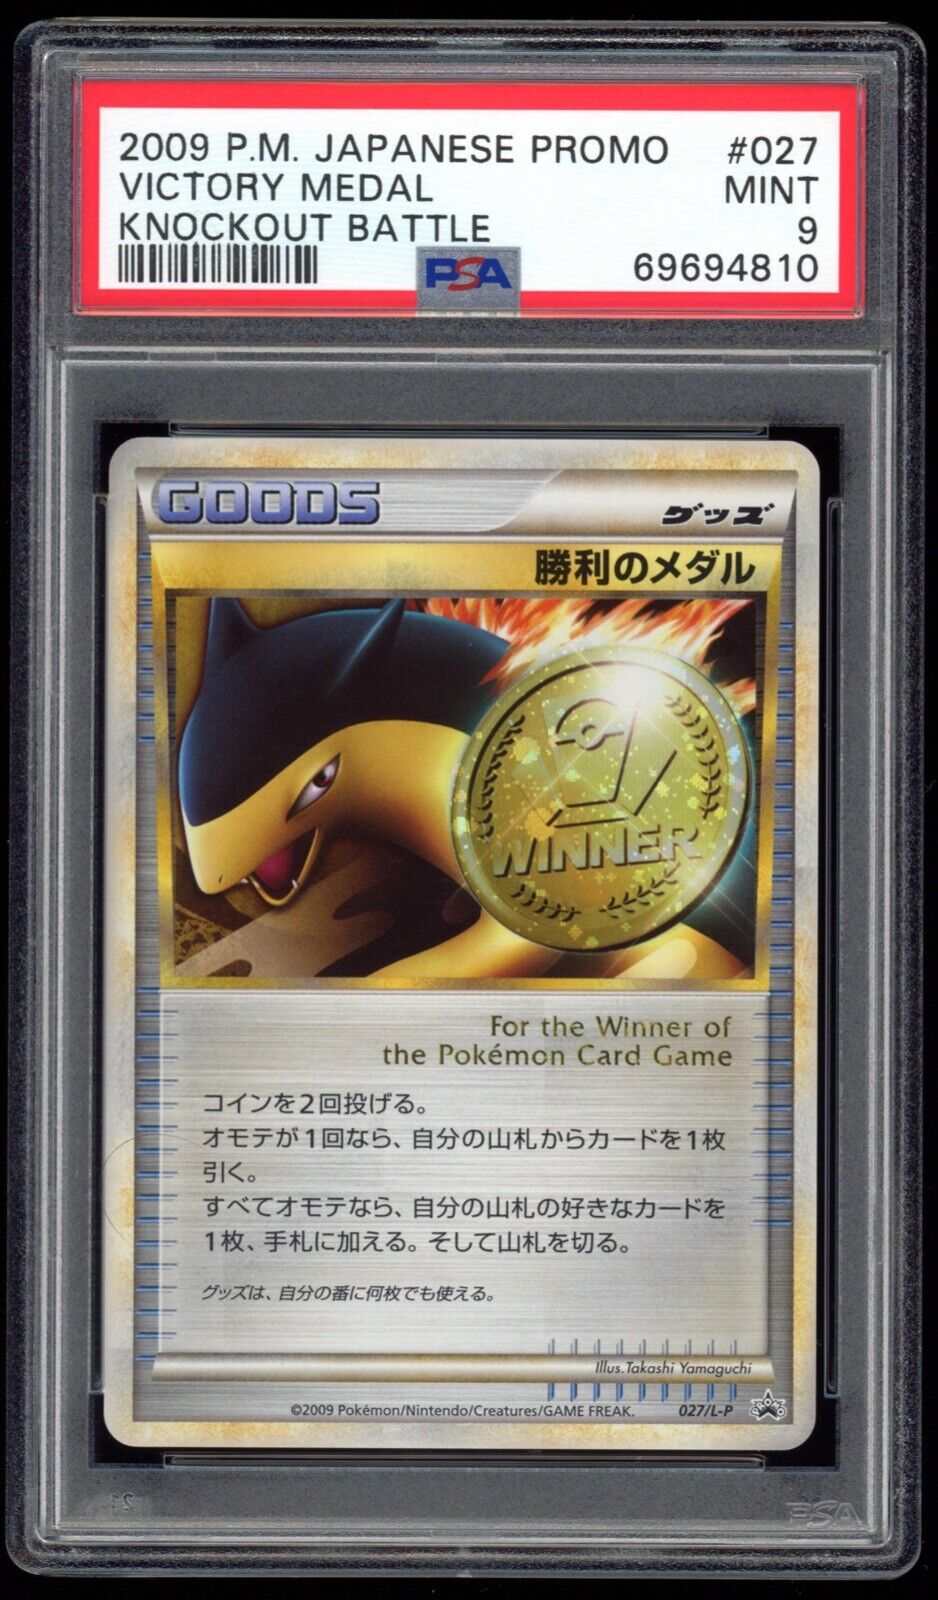 2009 PSA 9 Mint Typhlosion Victory Medal Japanese Promo Pokemon Card 027/L-P